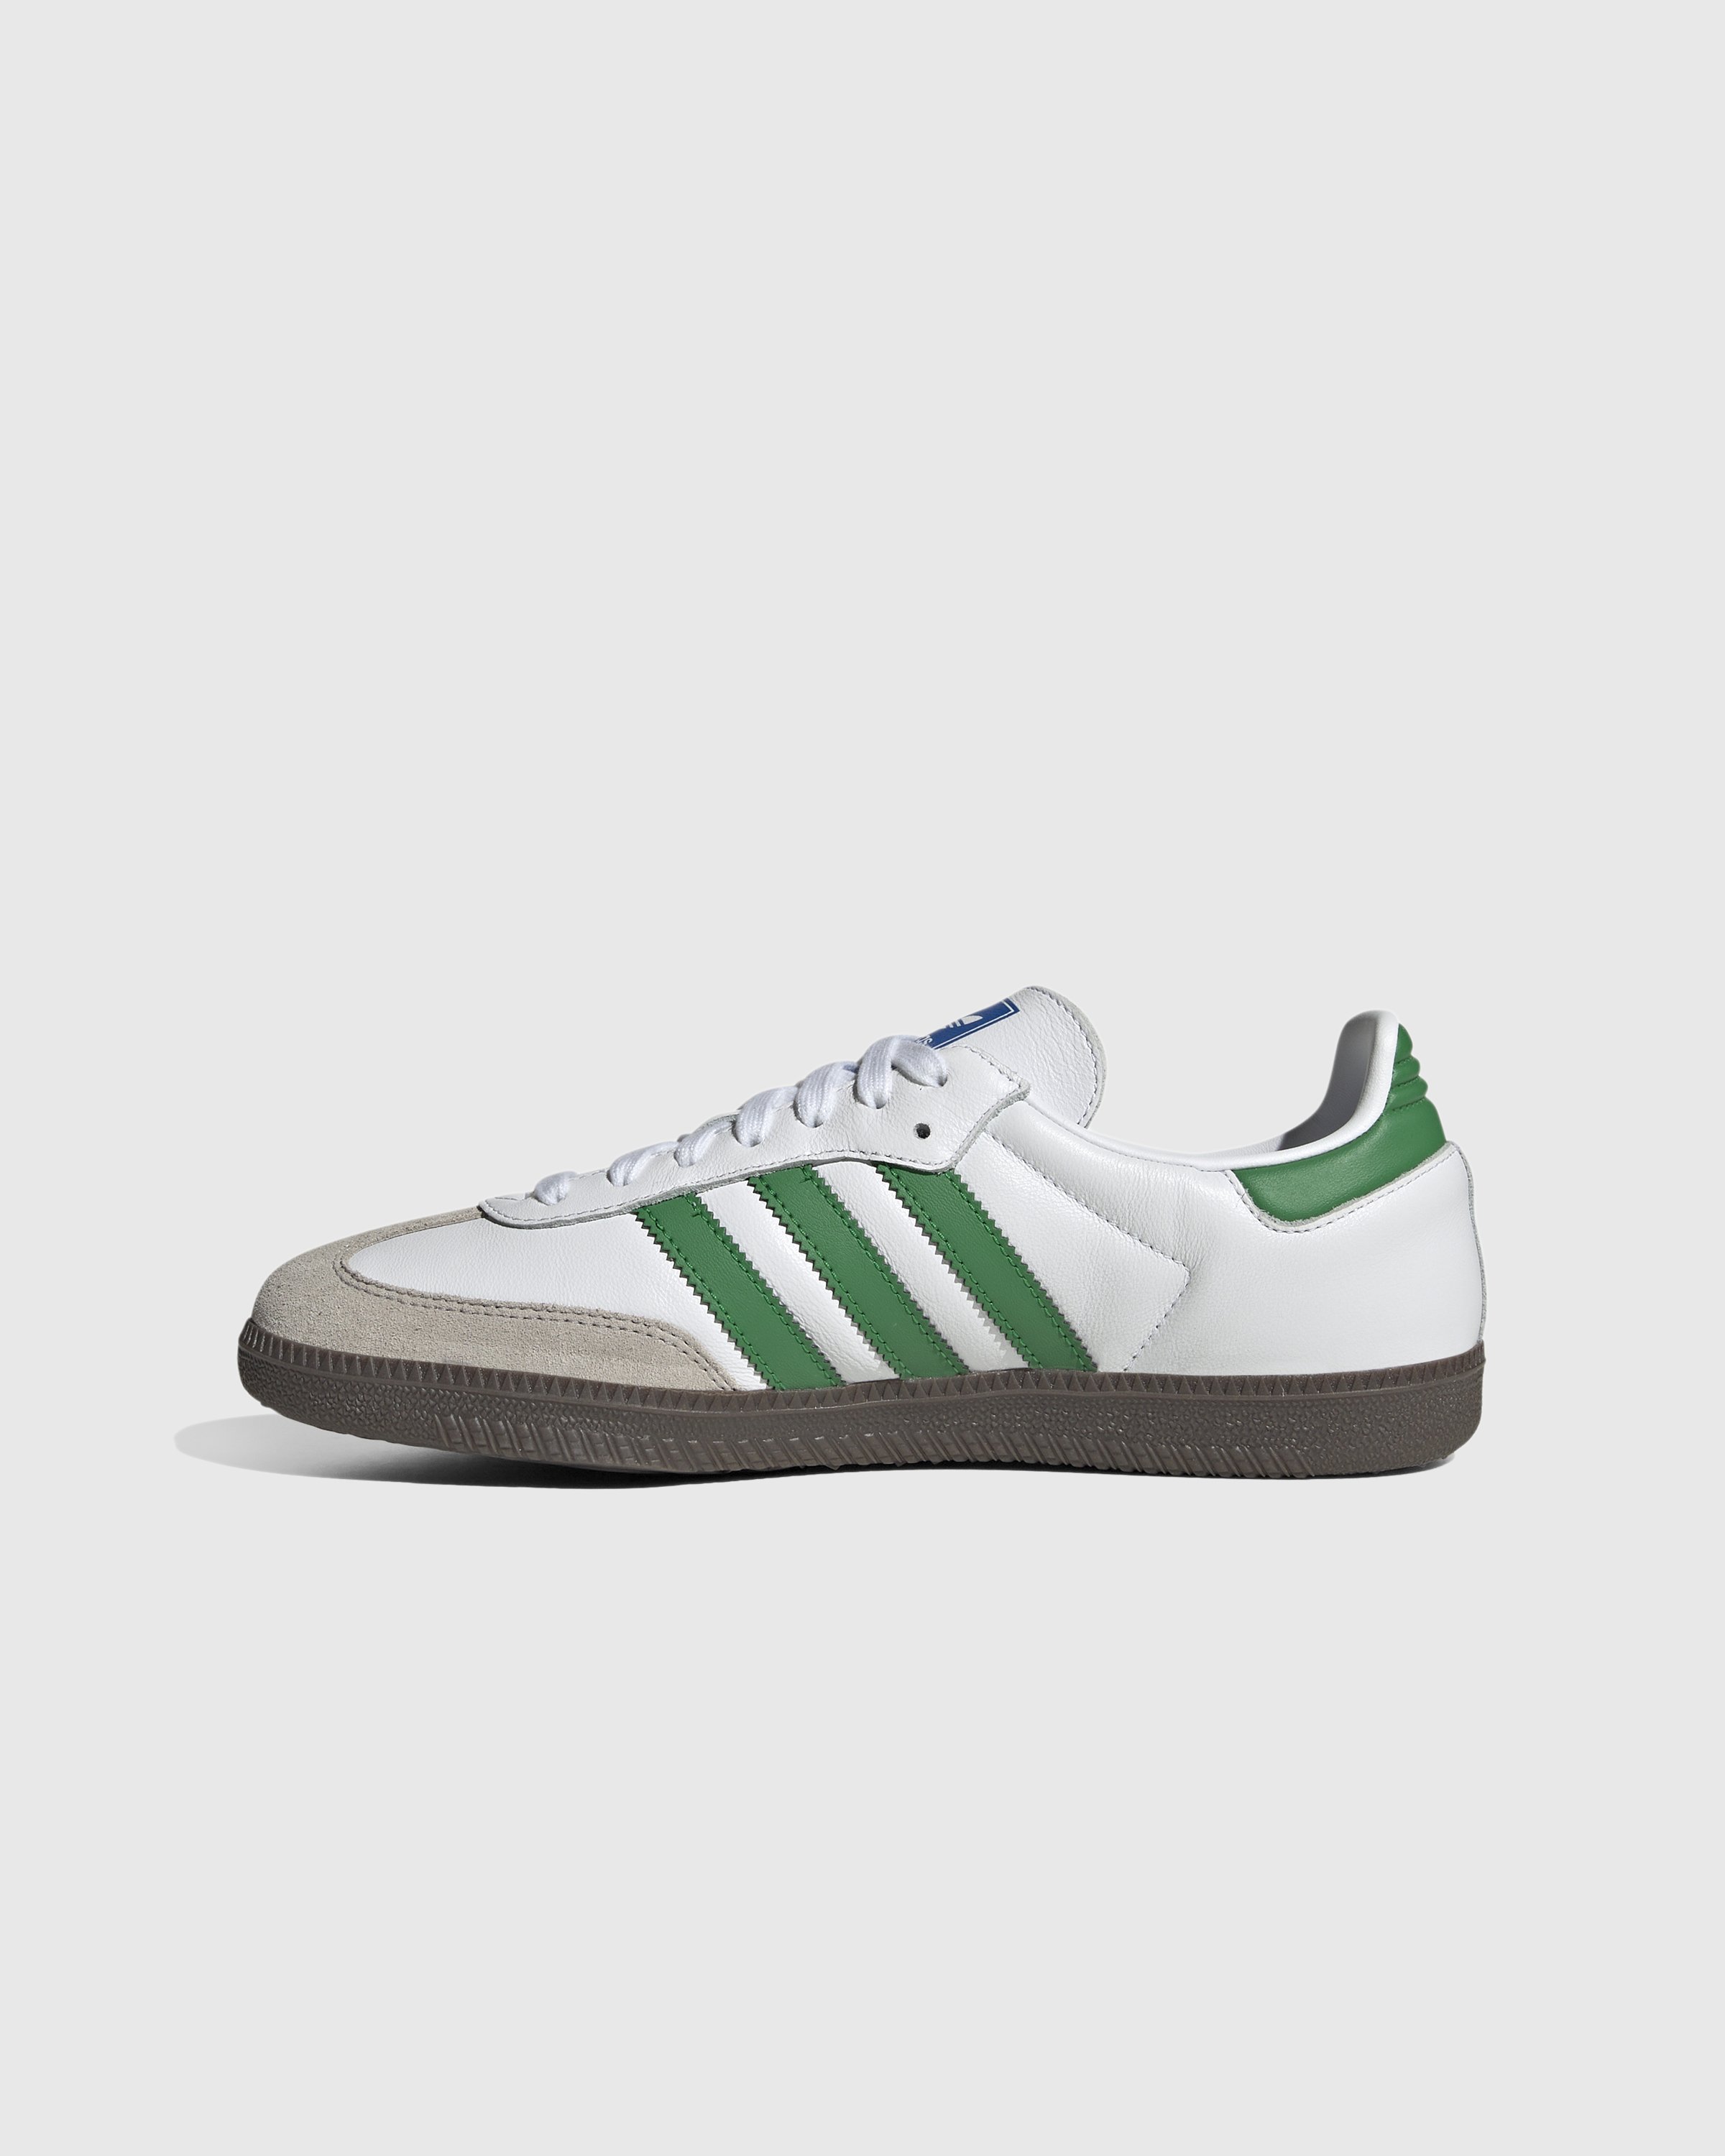 Adidas - Samba OG White/Green - Footwear - White - Image 2